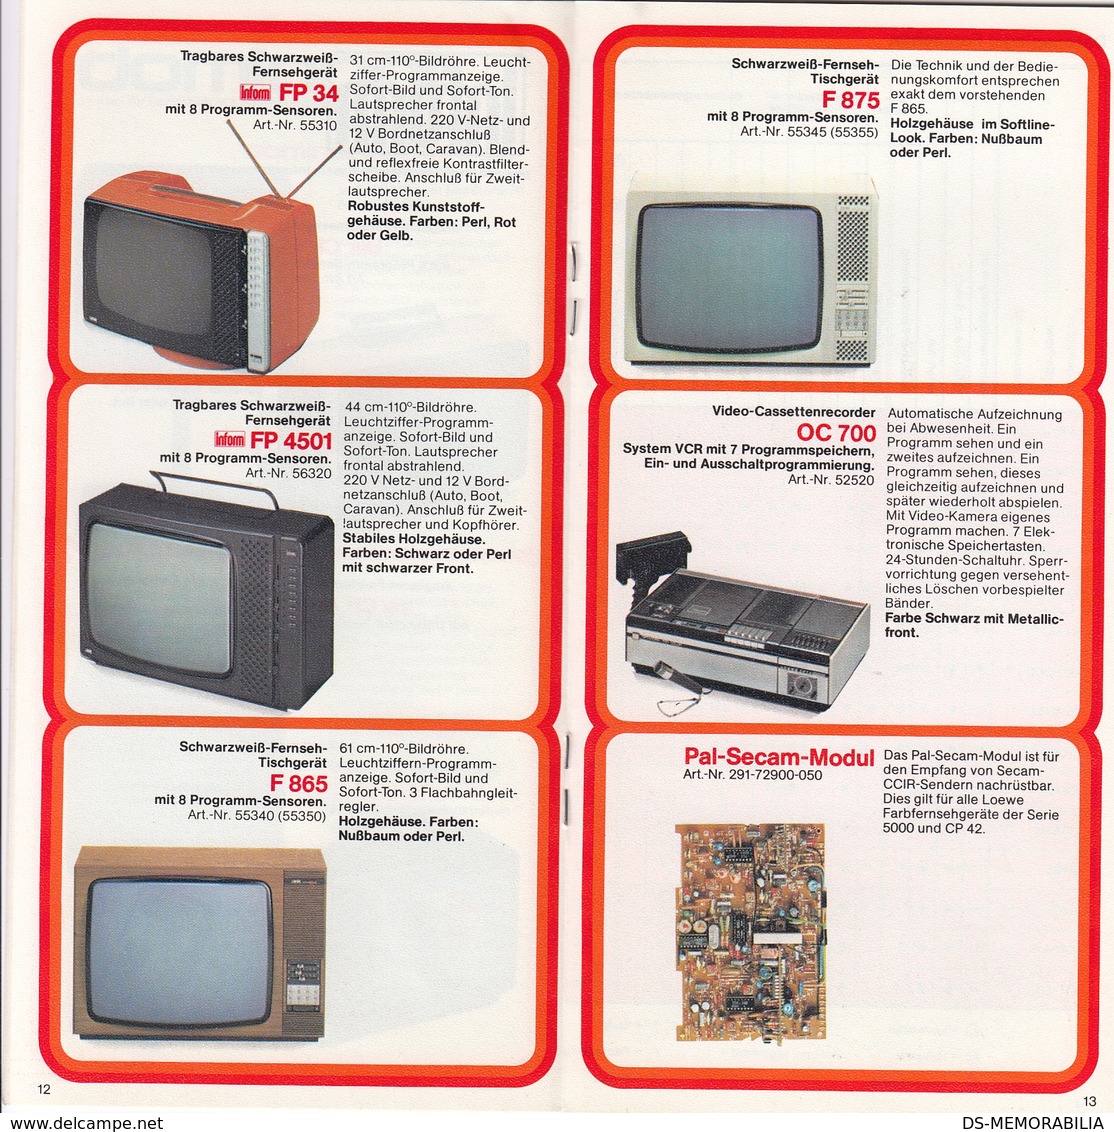 1977 LOEWE GERMANY TV TELEVISION RADIO GRAMOPHONE CATALOGUE BROCHURE PROSPECT - Fernsehgeräte